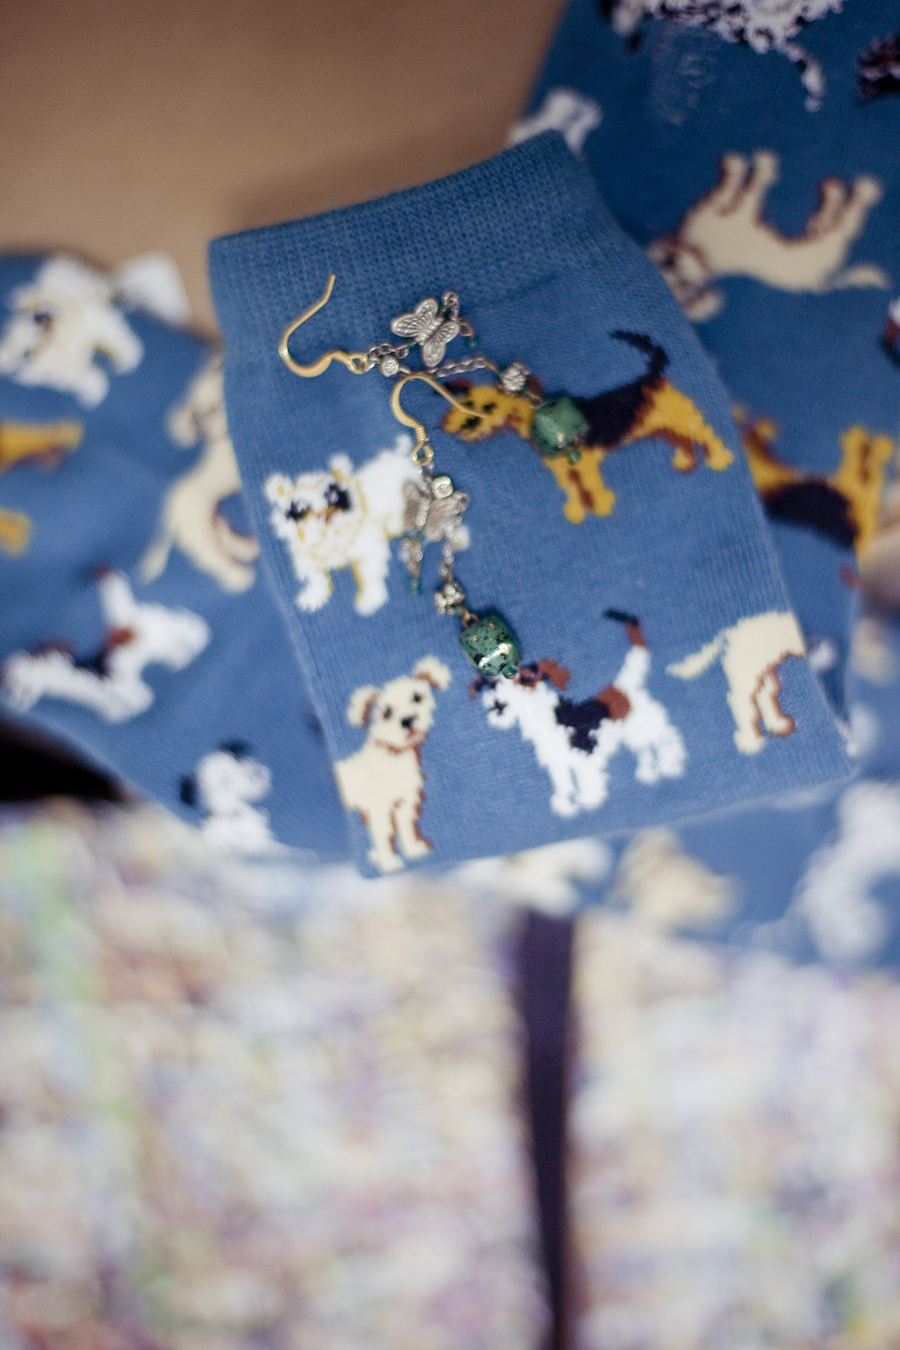 Detail of green dangly earrings and teal Taobao dog print socks